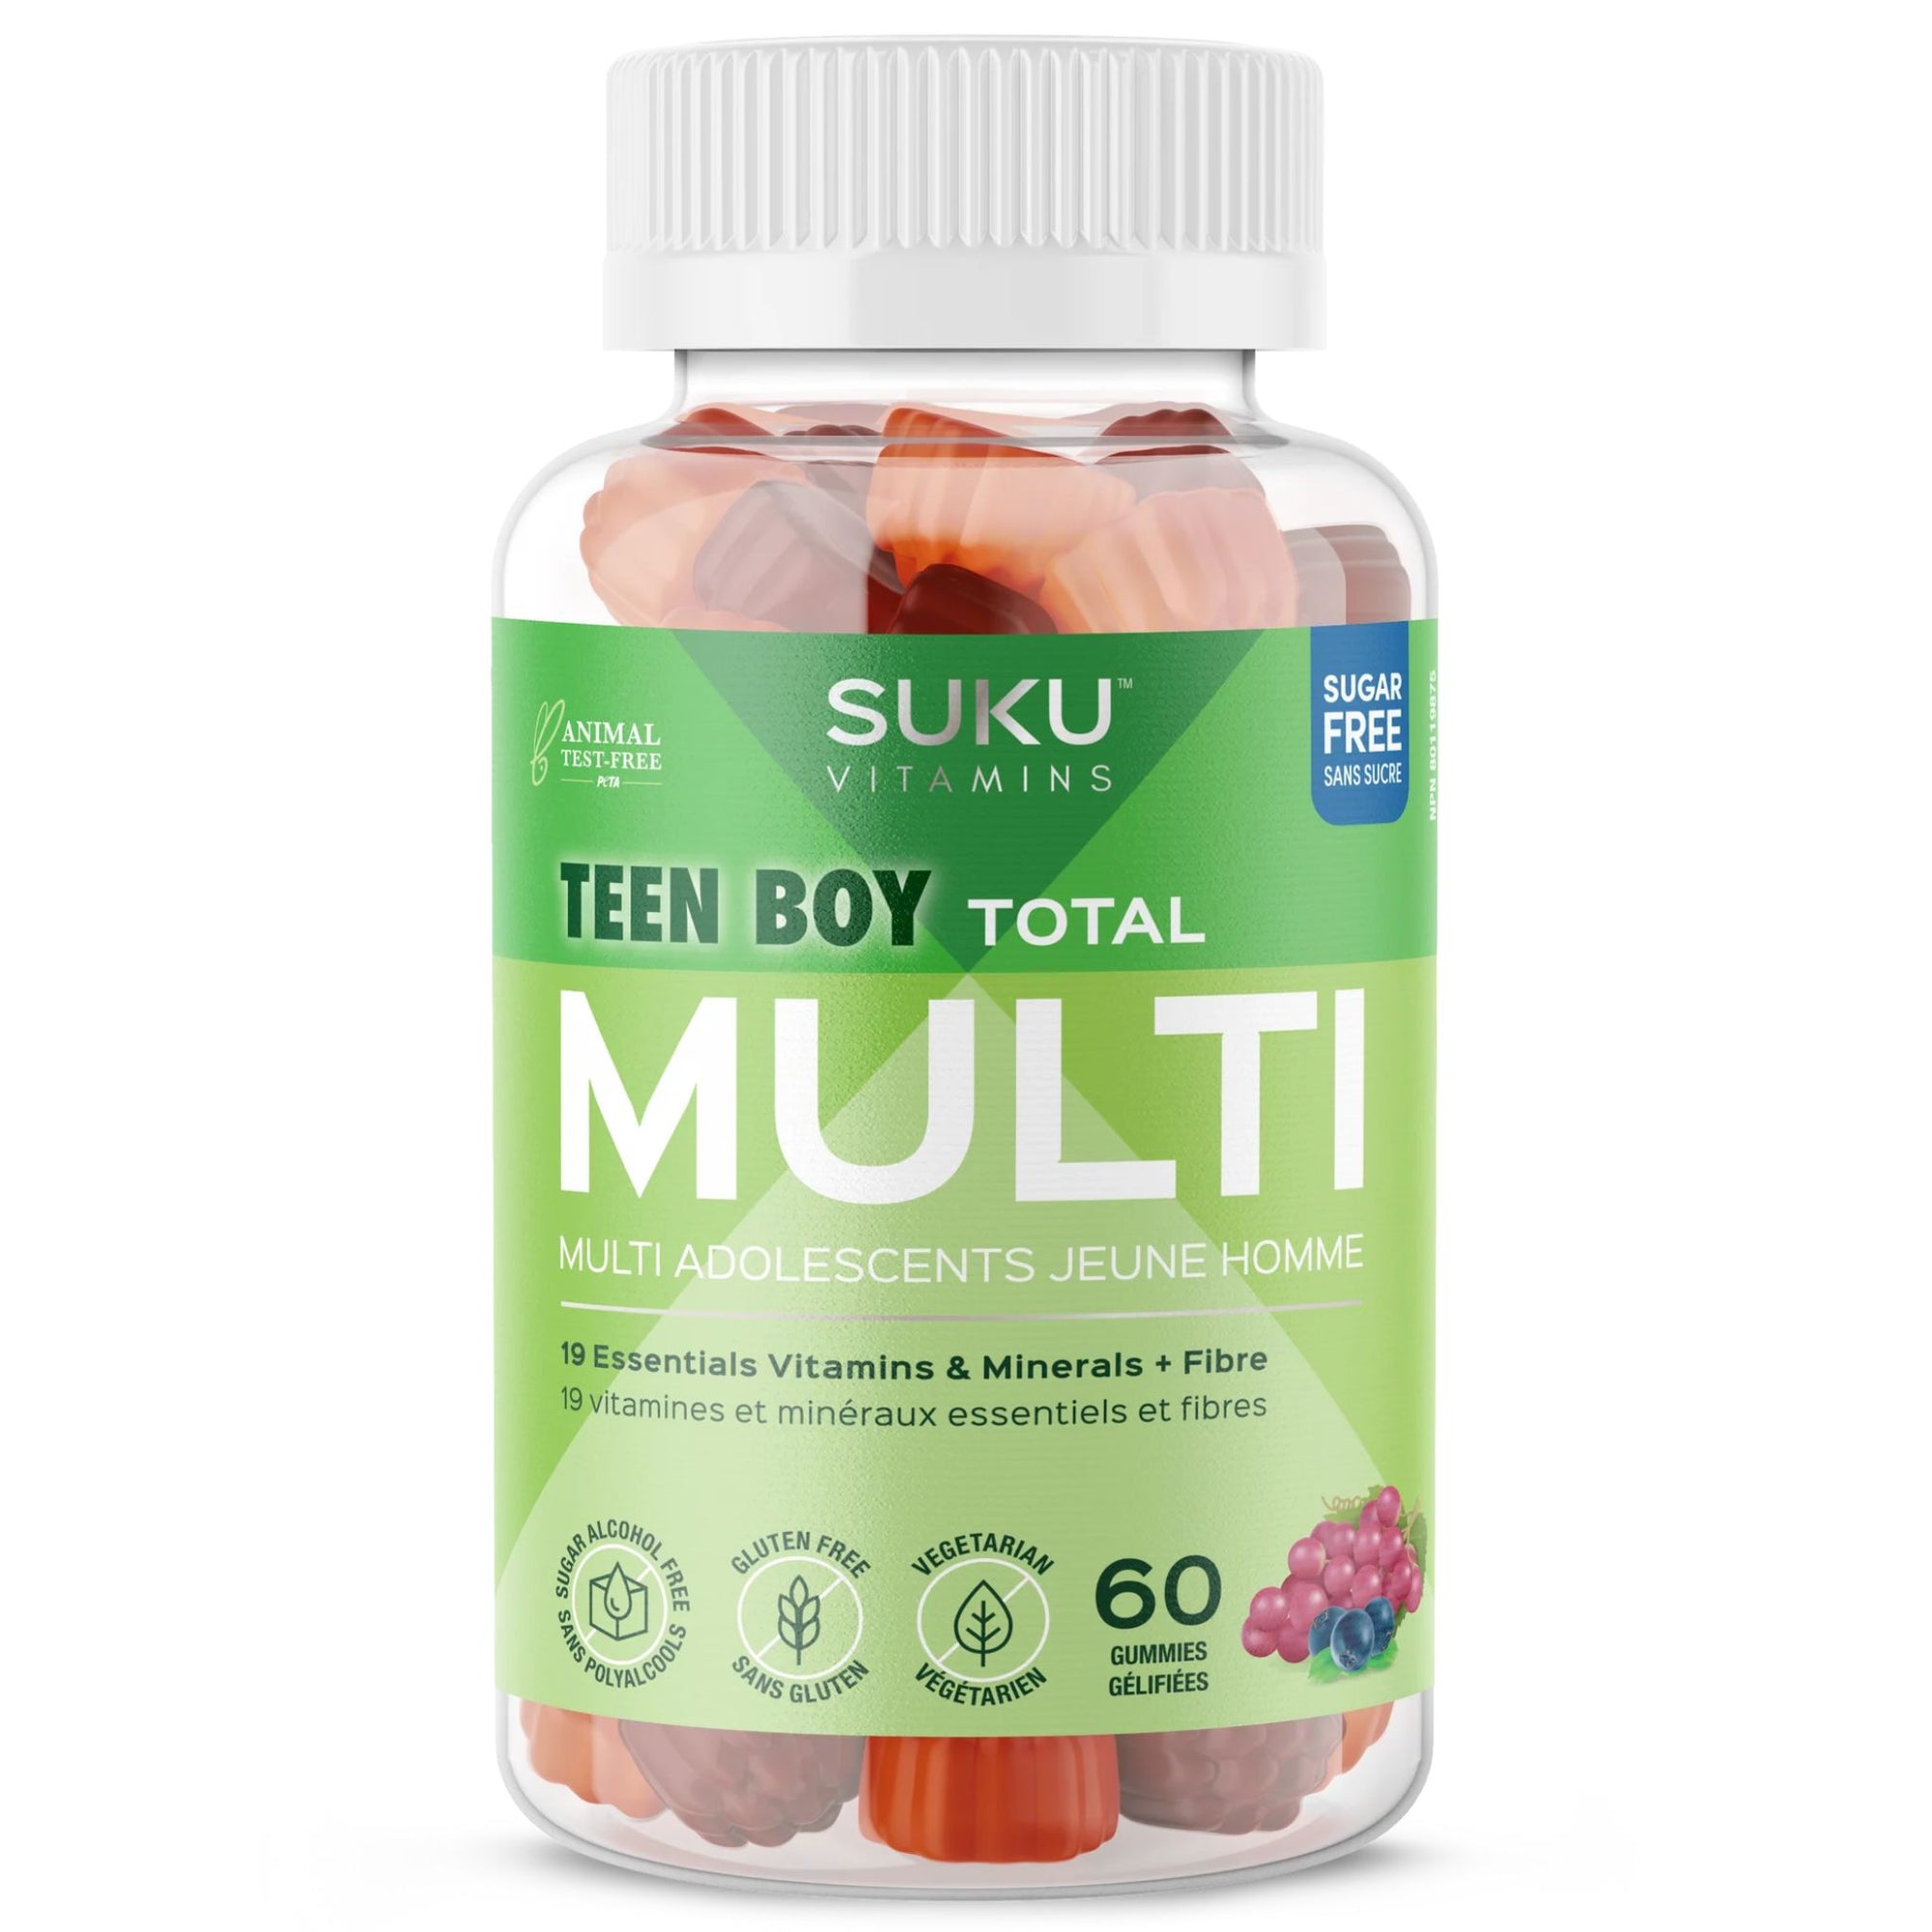 Suku Teen Boy Total Multi bottle showcasing 60 nutrition-packed gummies. Sugar Free, Sugar alcohol free, gluten free & vegetarian. 